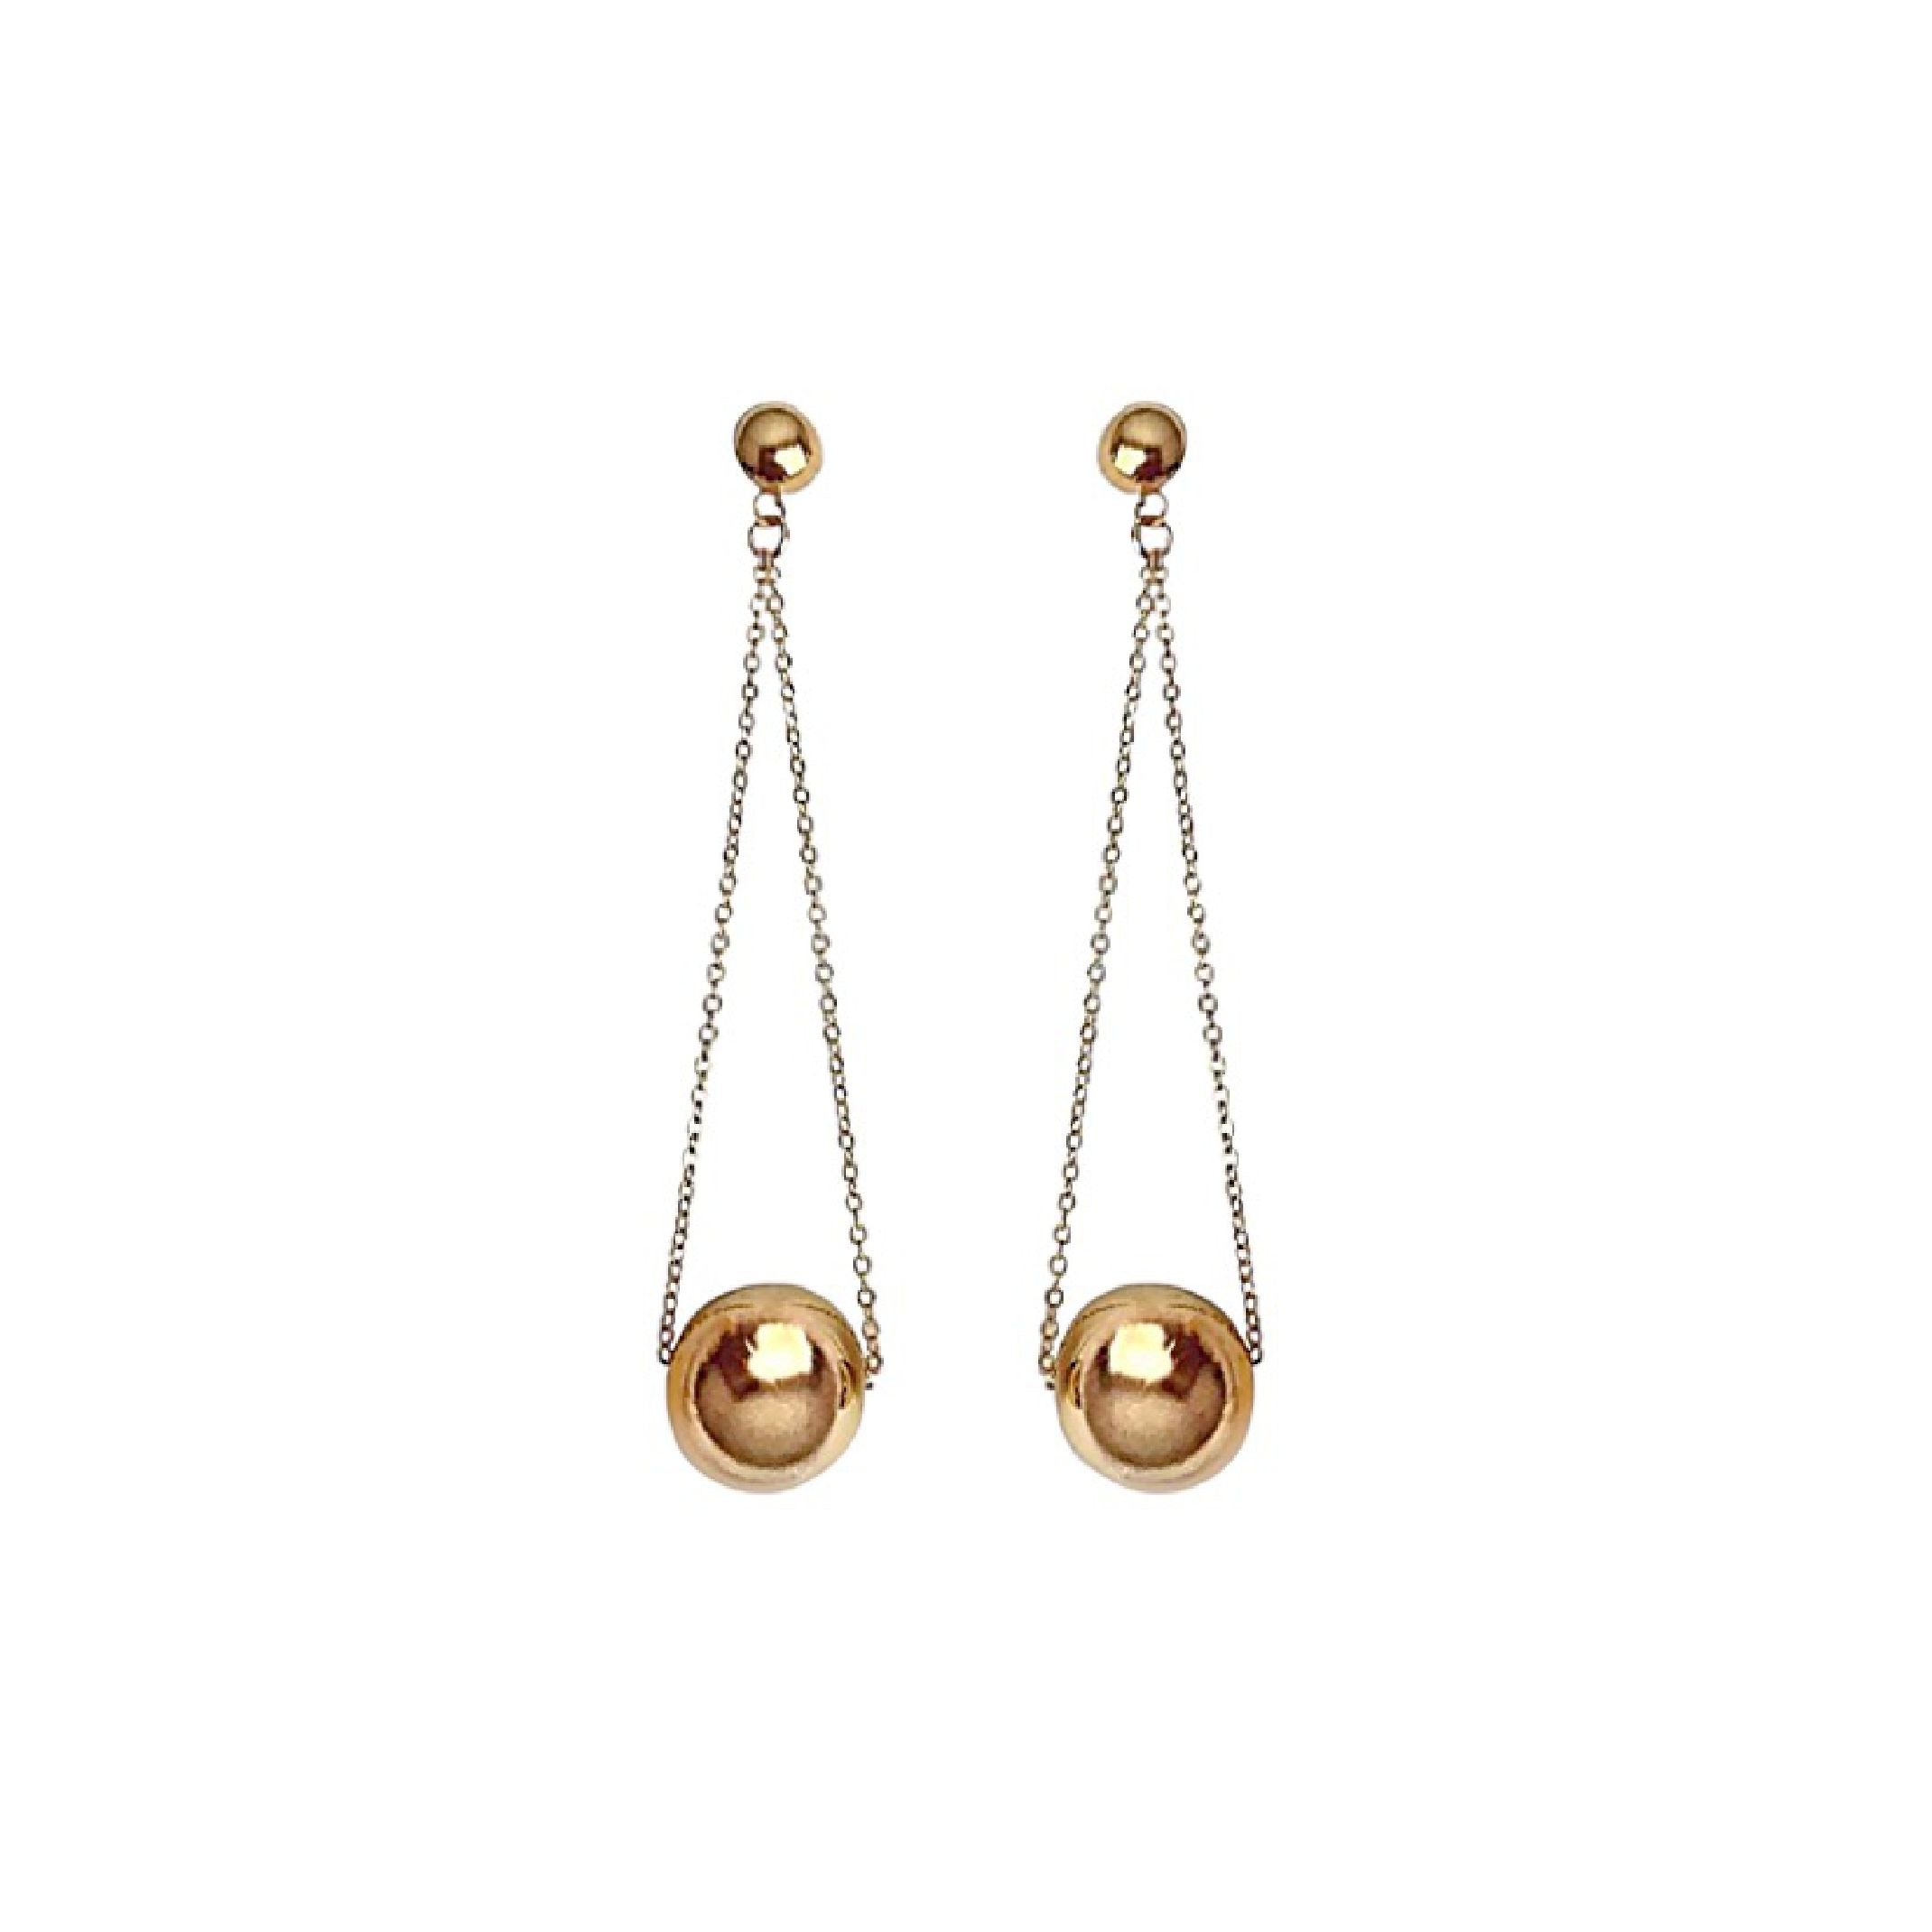 Gold orb dangle earrings 